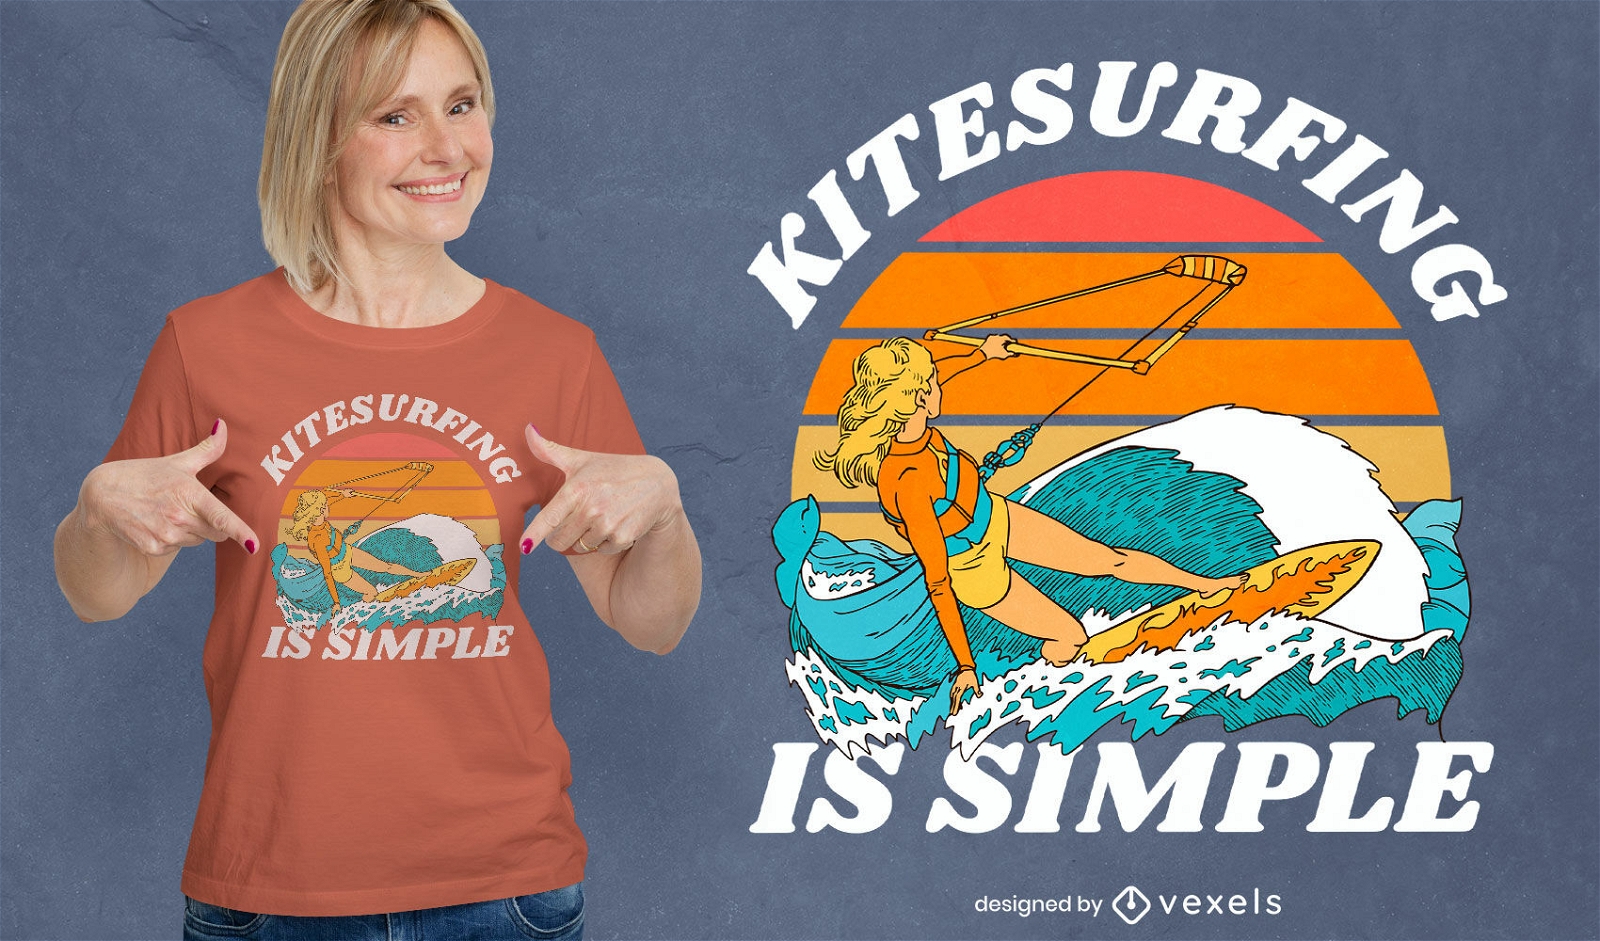 Kitesurfing is simple t-shirt design